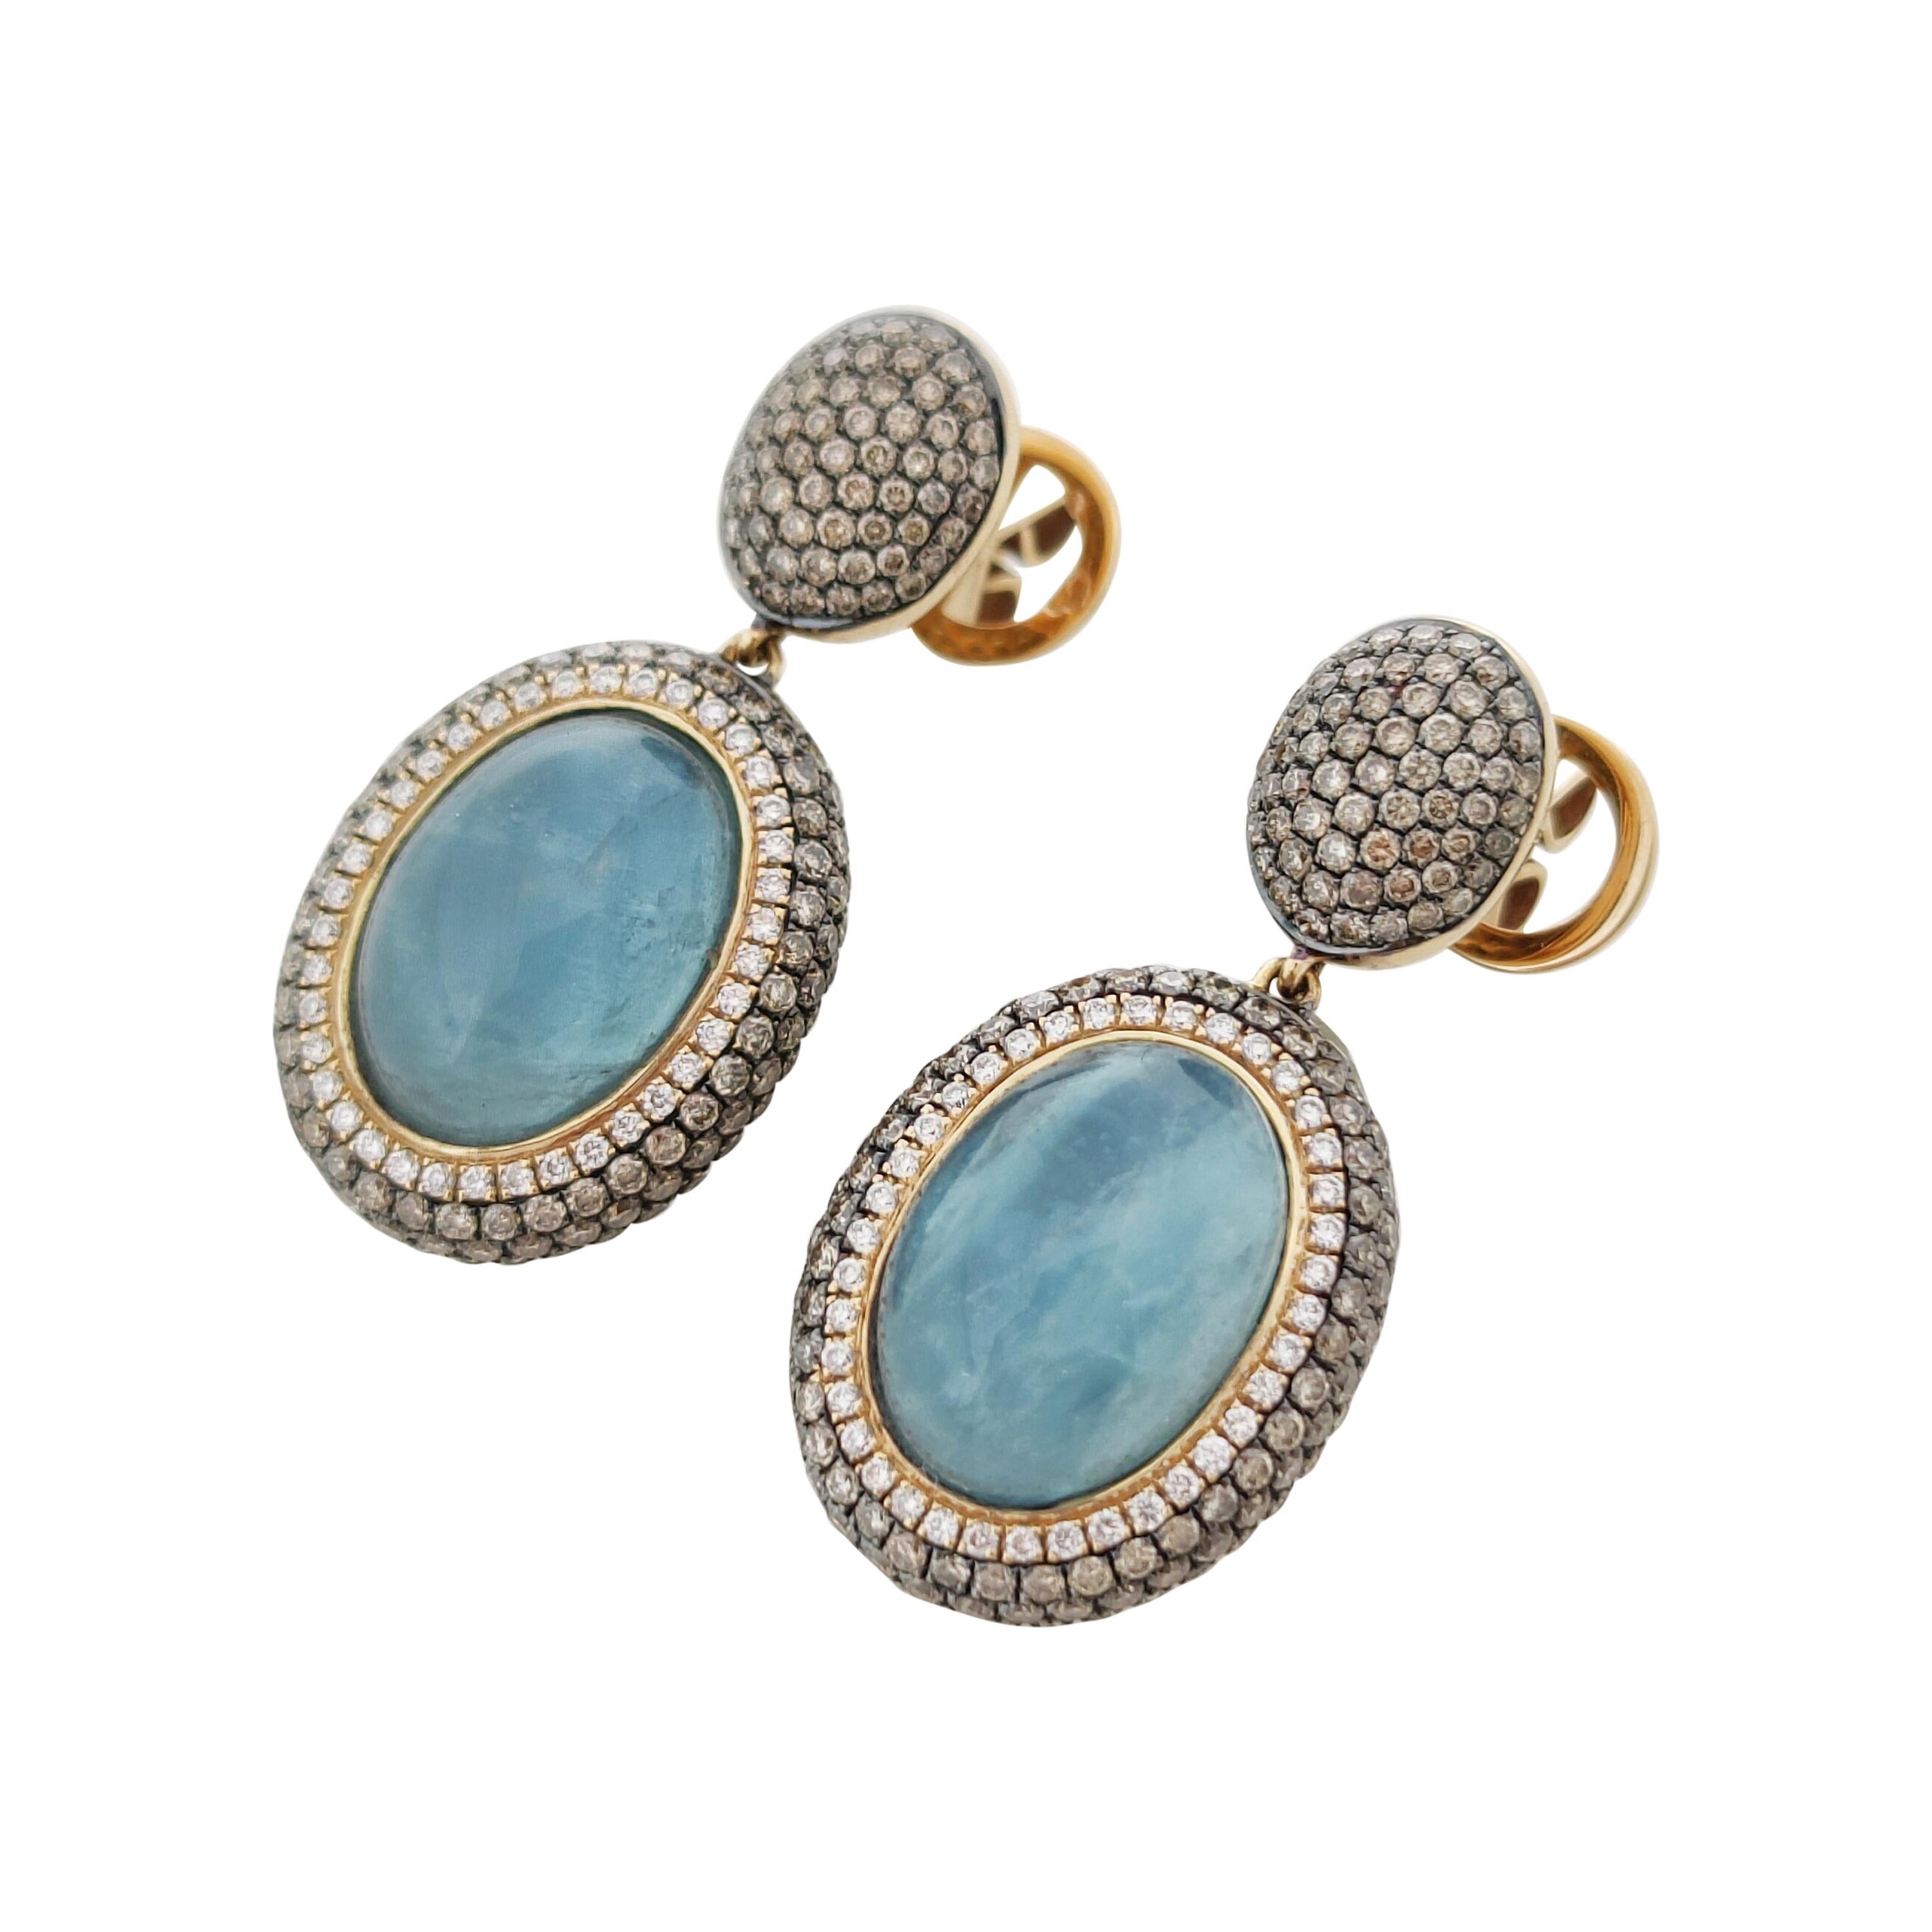 Bespoke One-of-a-Kind Luxury Drop Earrings with Aquamarine and Diamonds